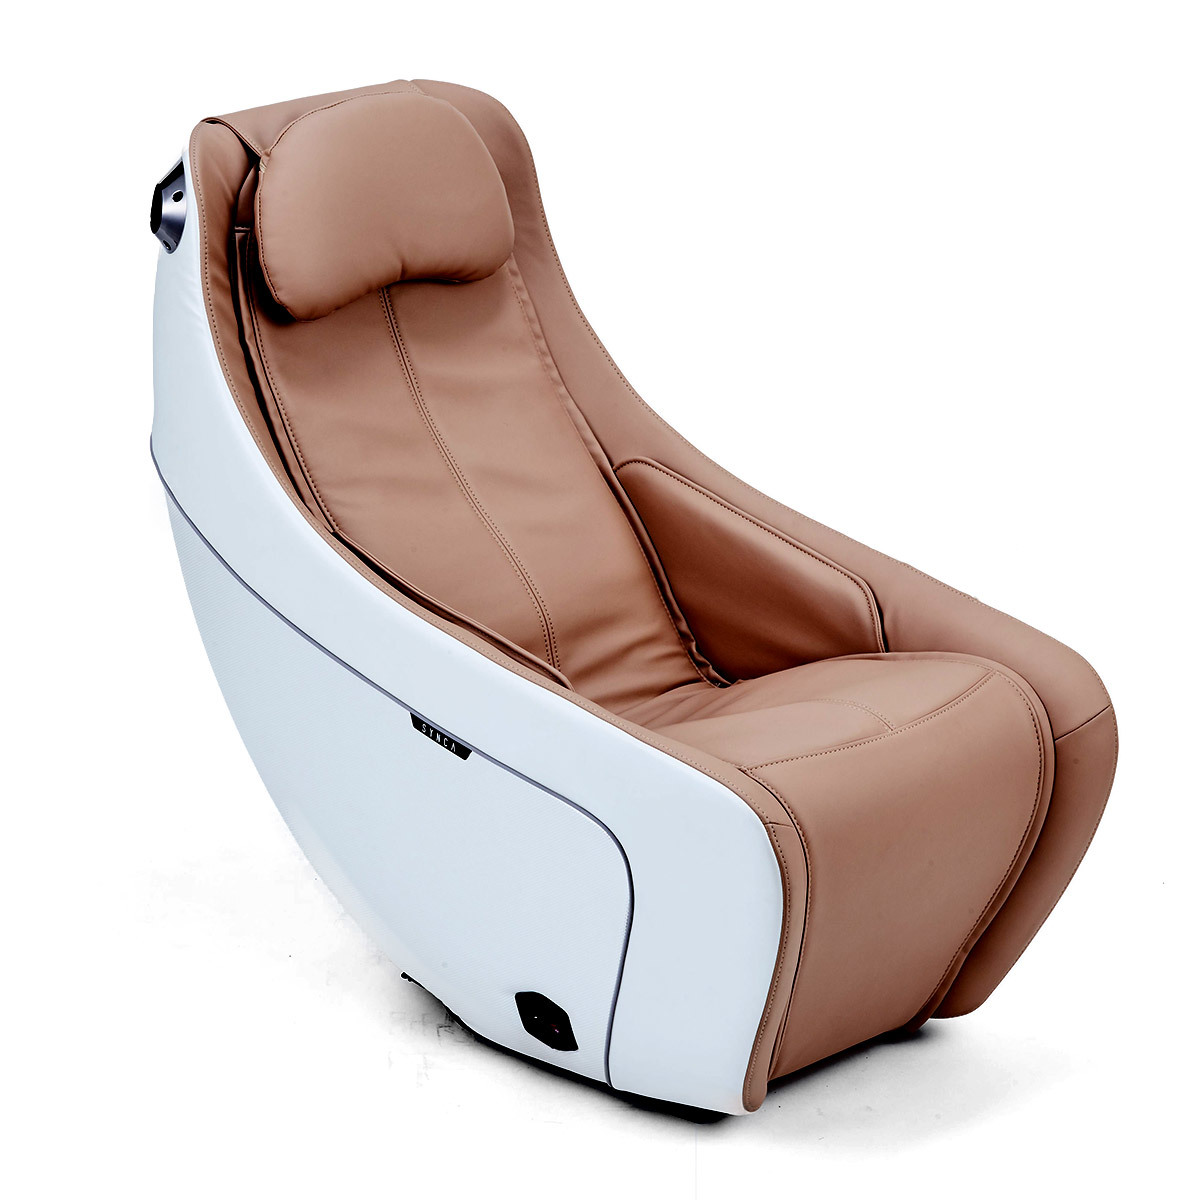 synca circ compact massage chair. image 1 DIJGPIK